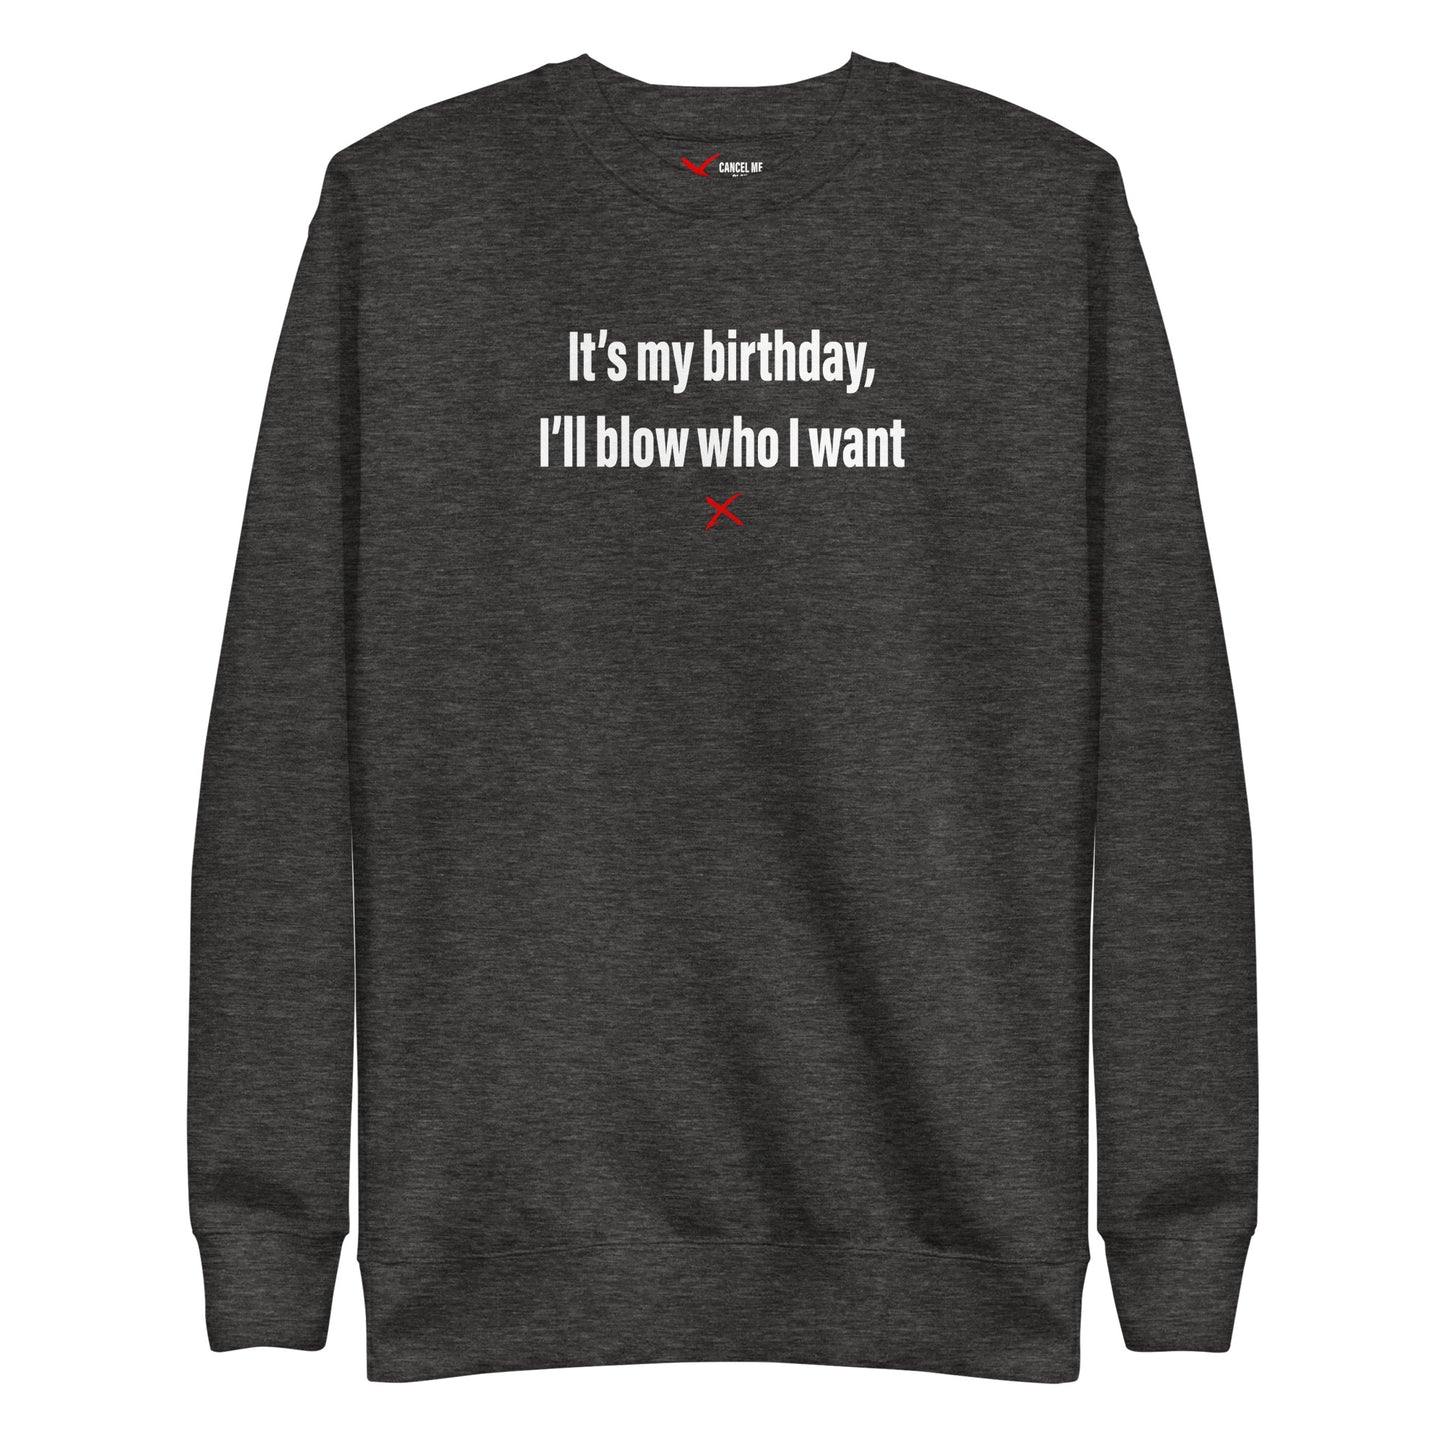 It's my birthday, I'll blow who I want - Sweatshirt